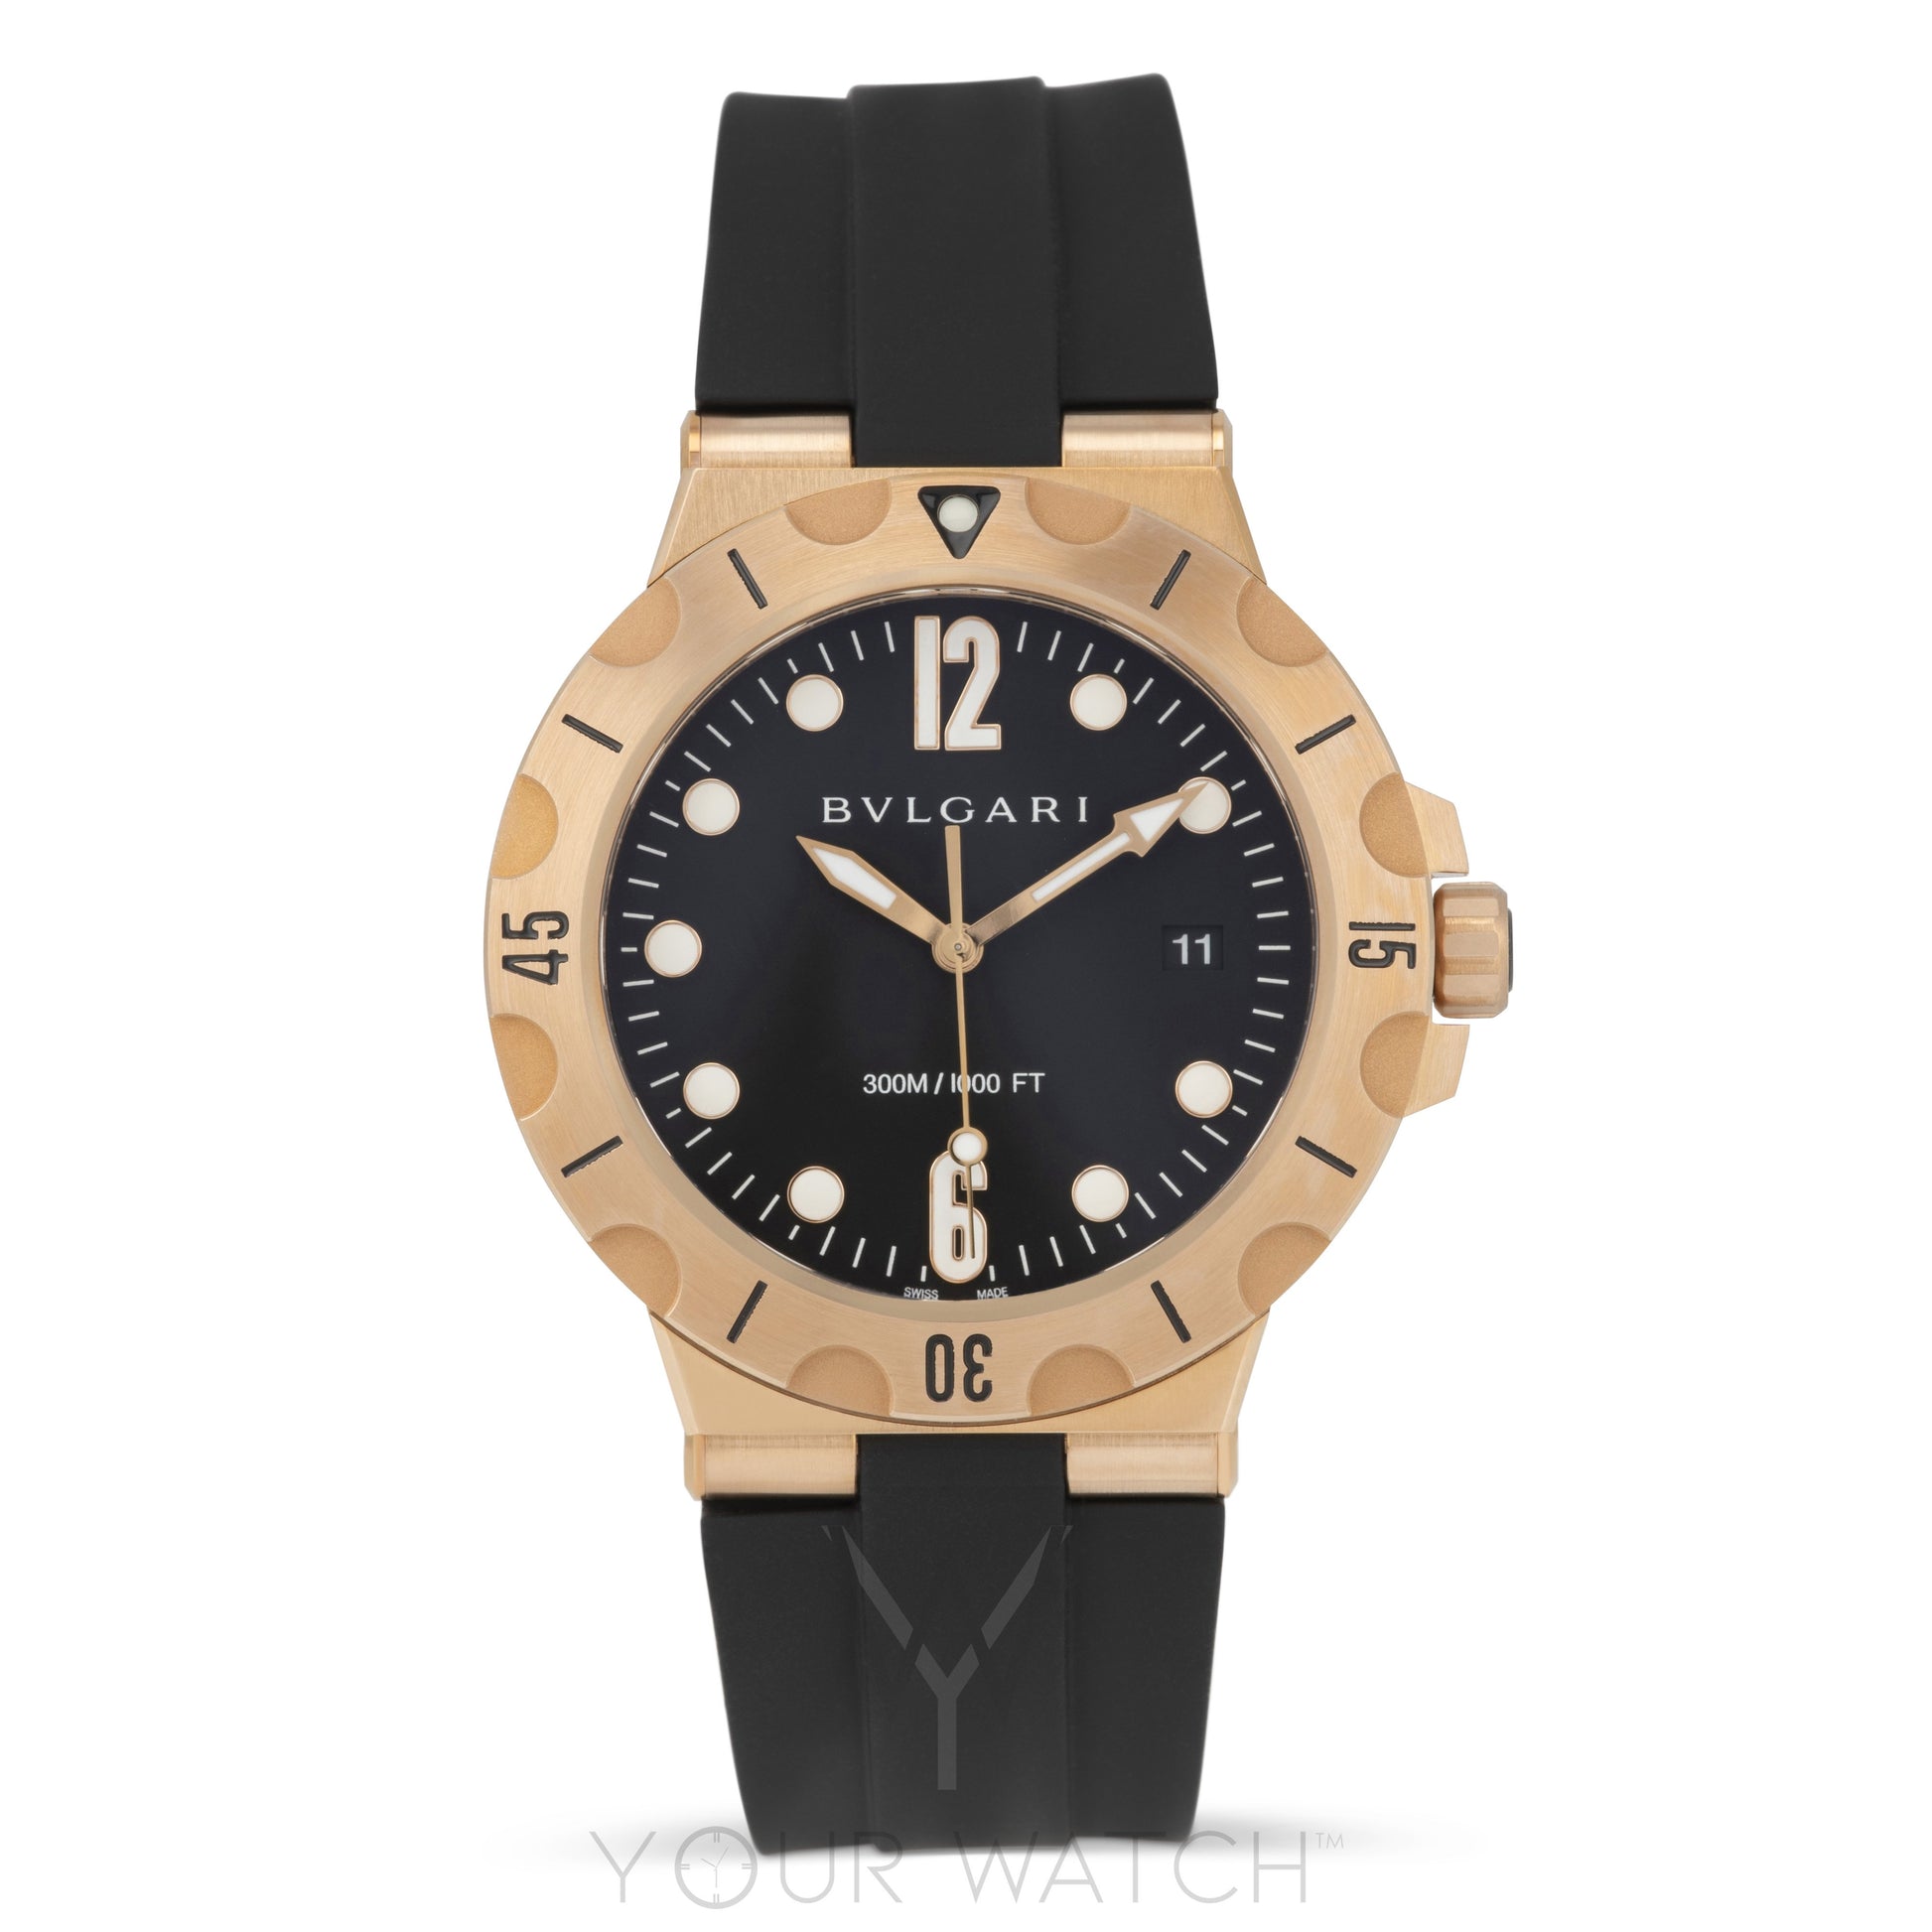 Bvlgari Diagono Professional Automatic Men's Watch 102326